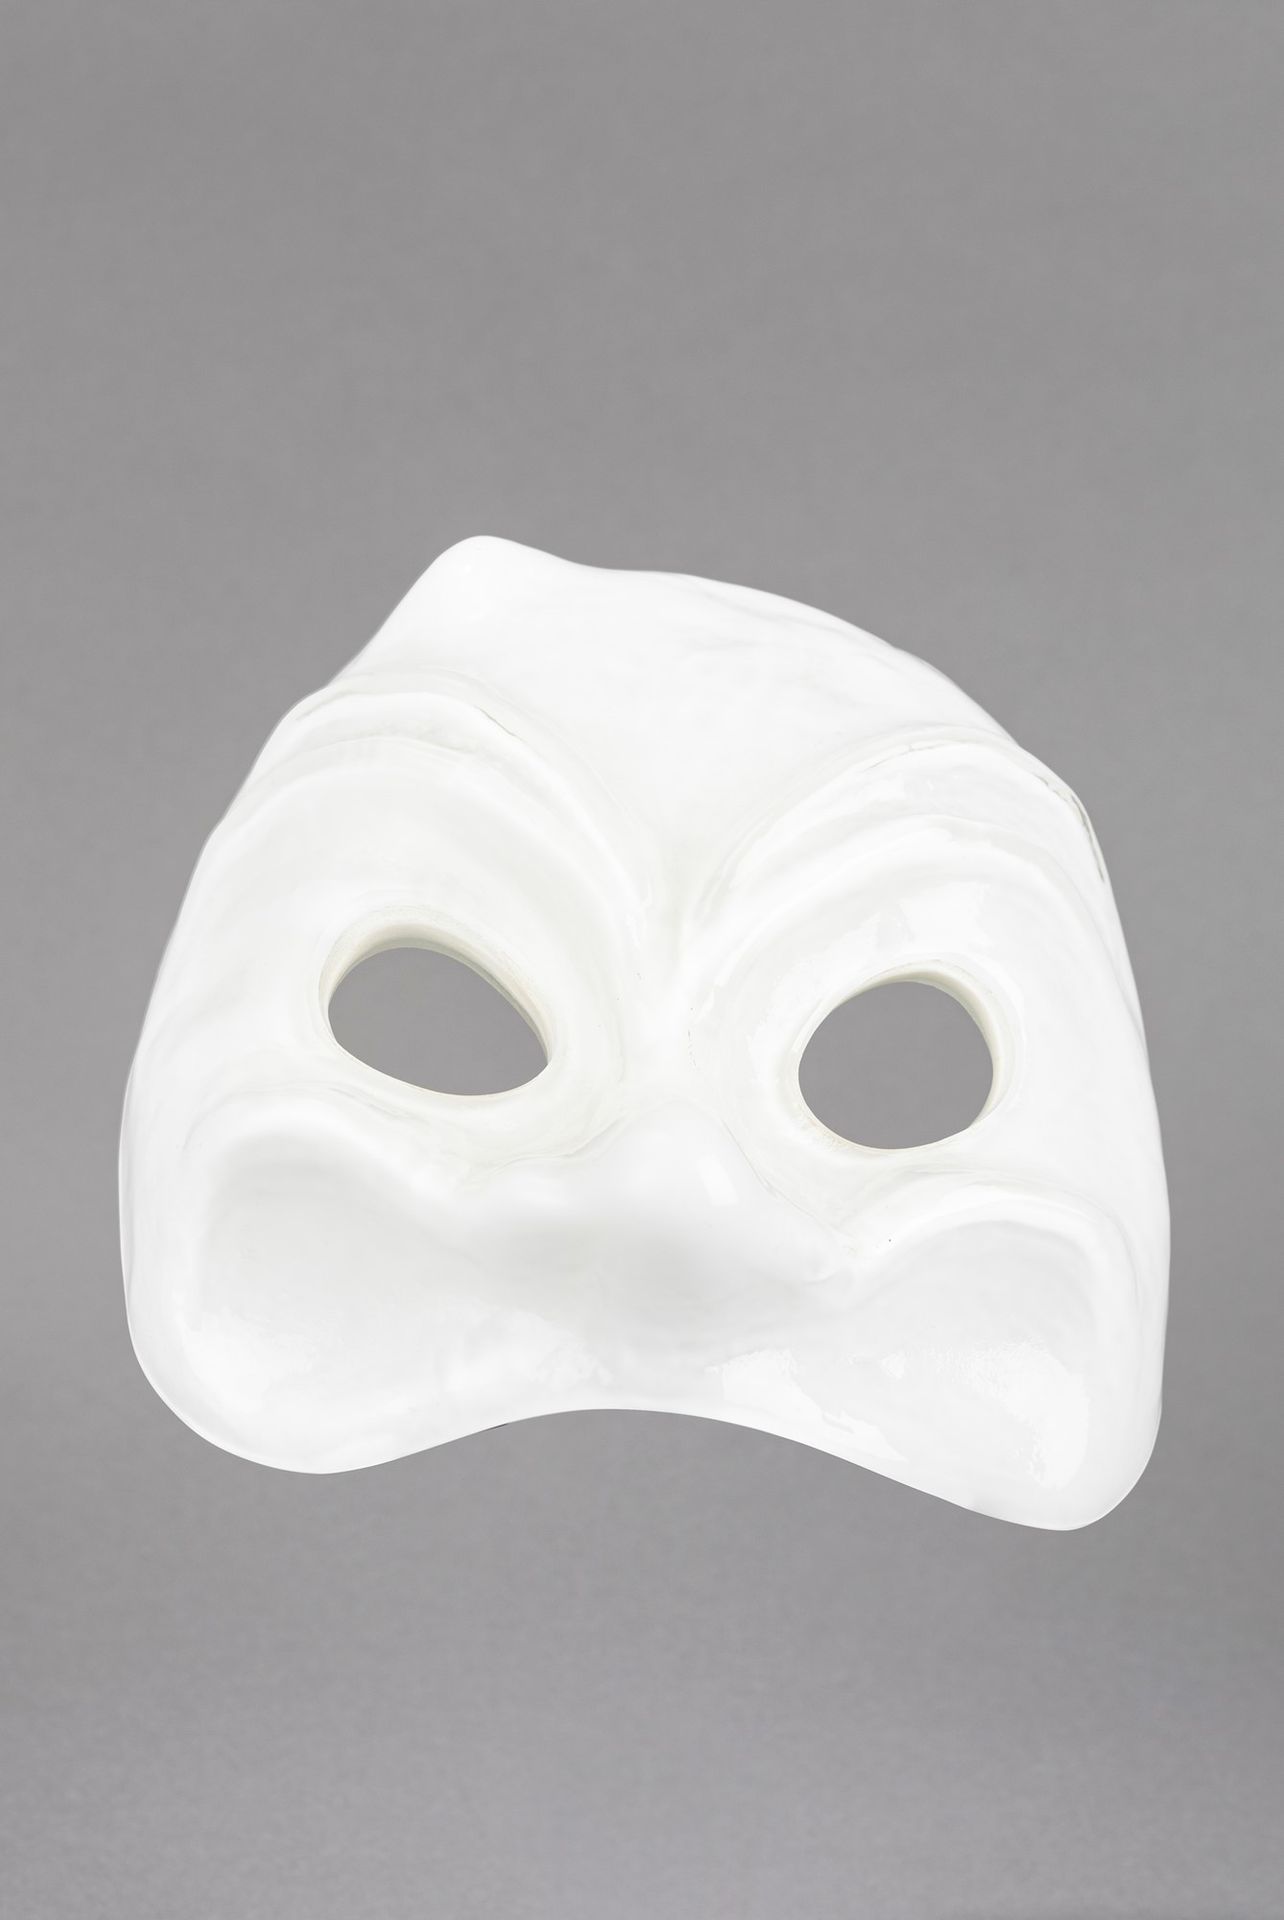 VENINI 面具，1990年

h 17 x 17 x 10 cm
incamiciato opaline white glass。

有签名和原始标签。